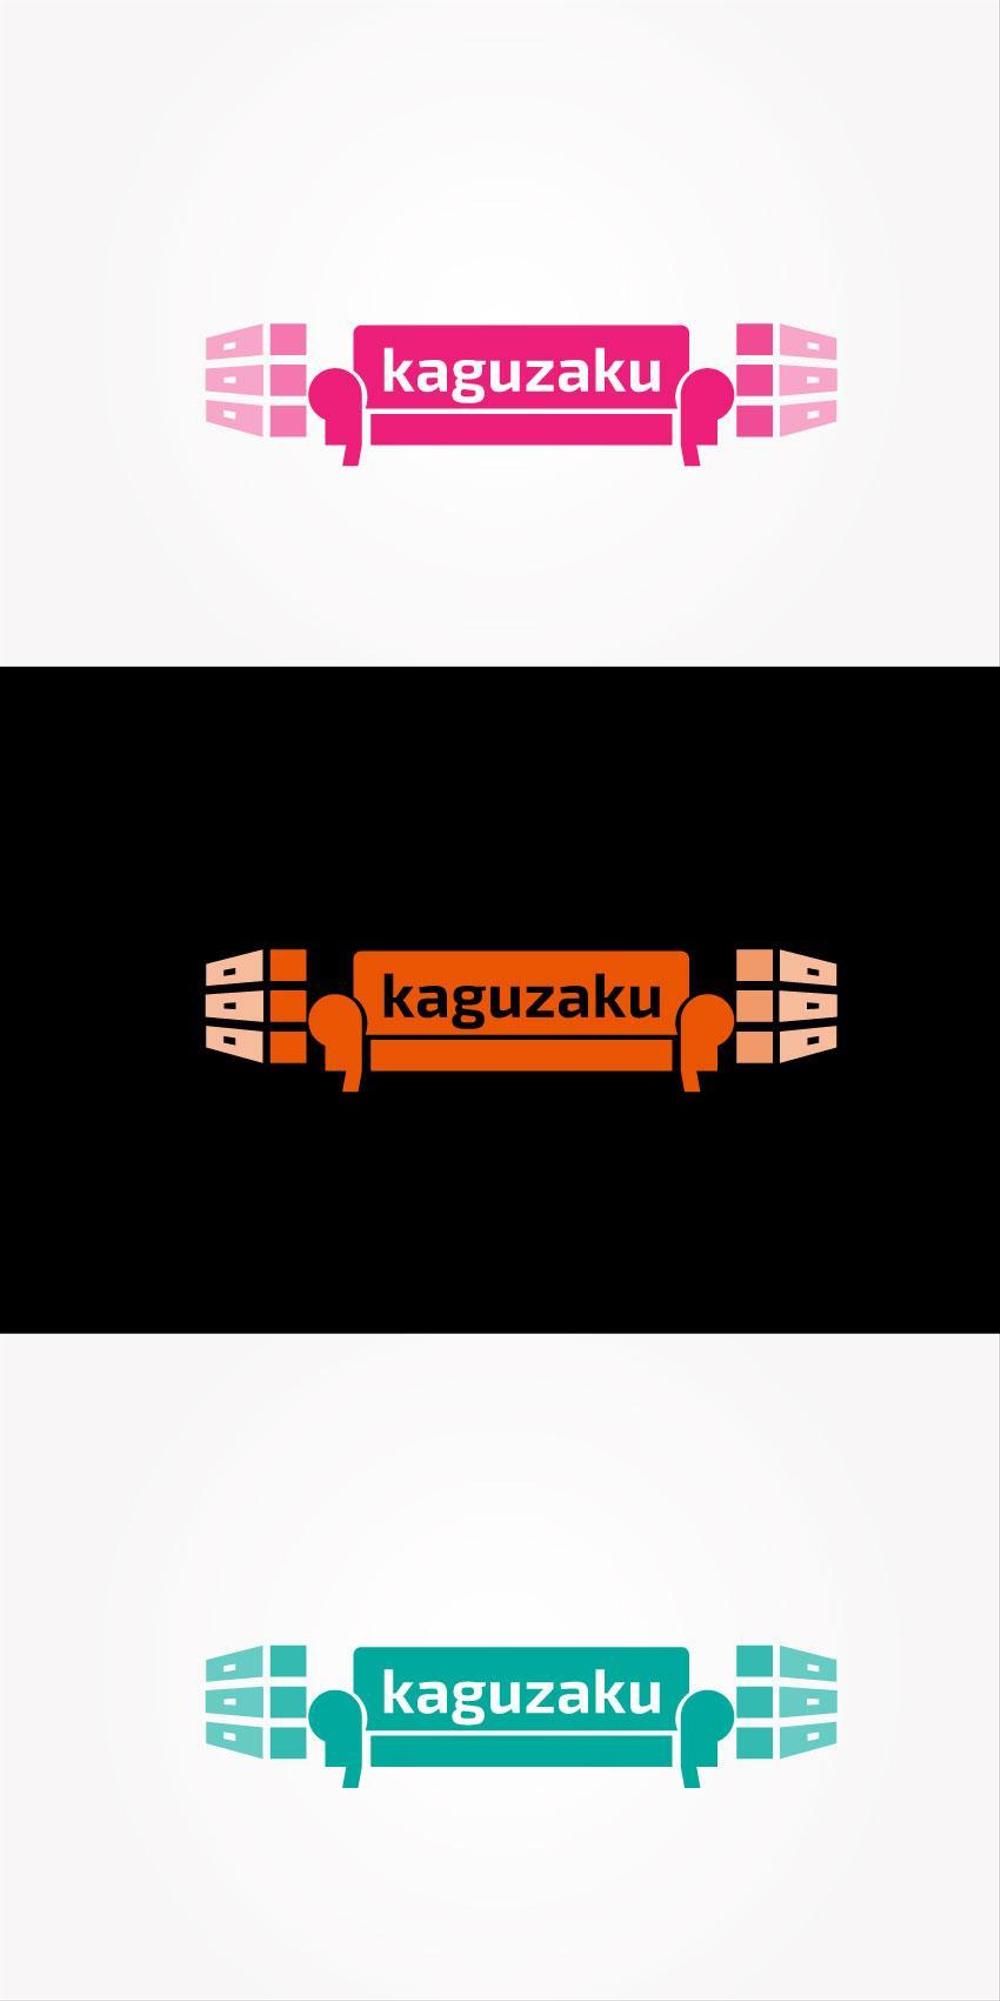 ECサイト「kaguzaku」のロゴ